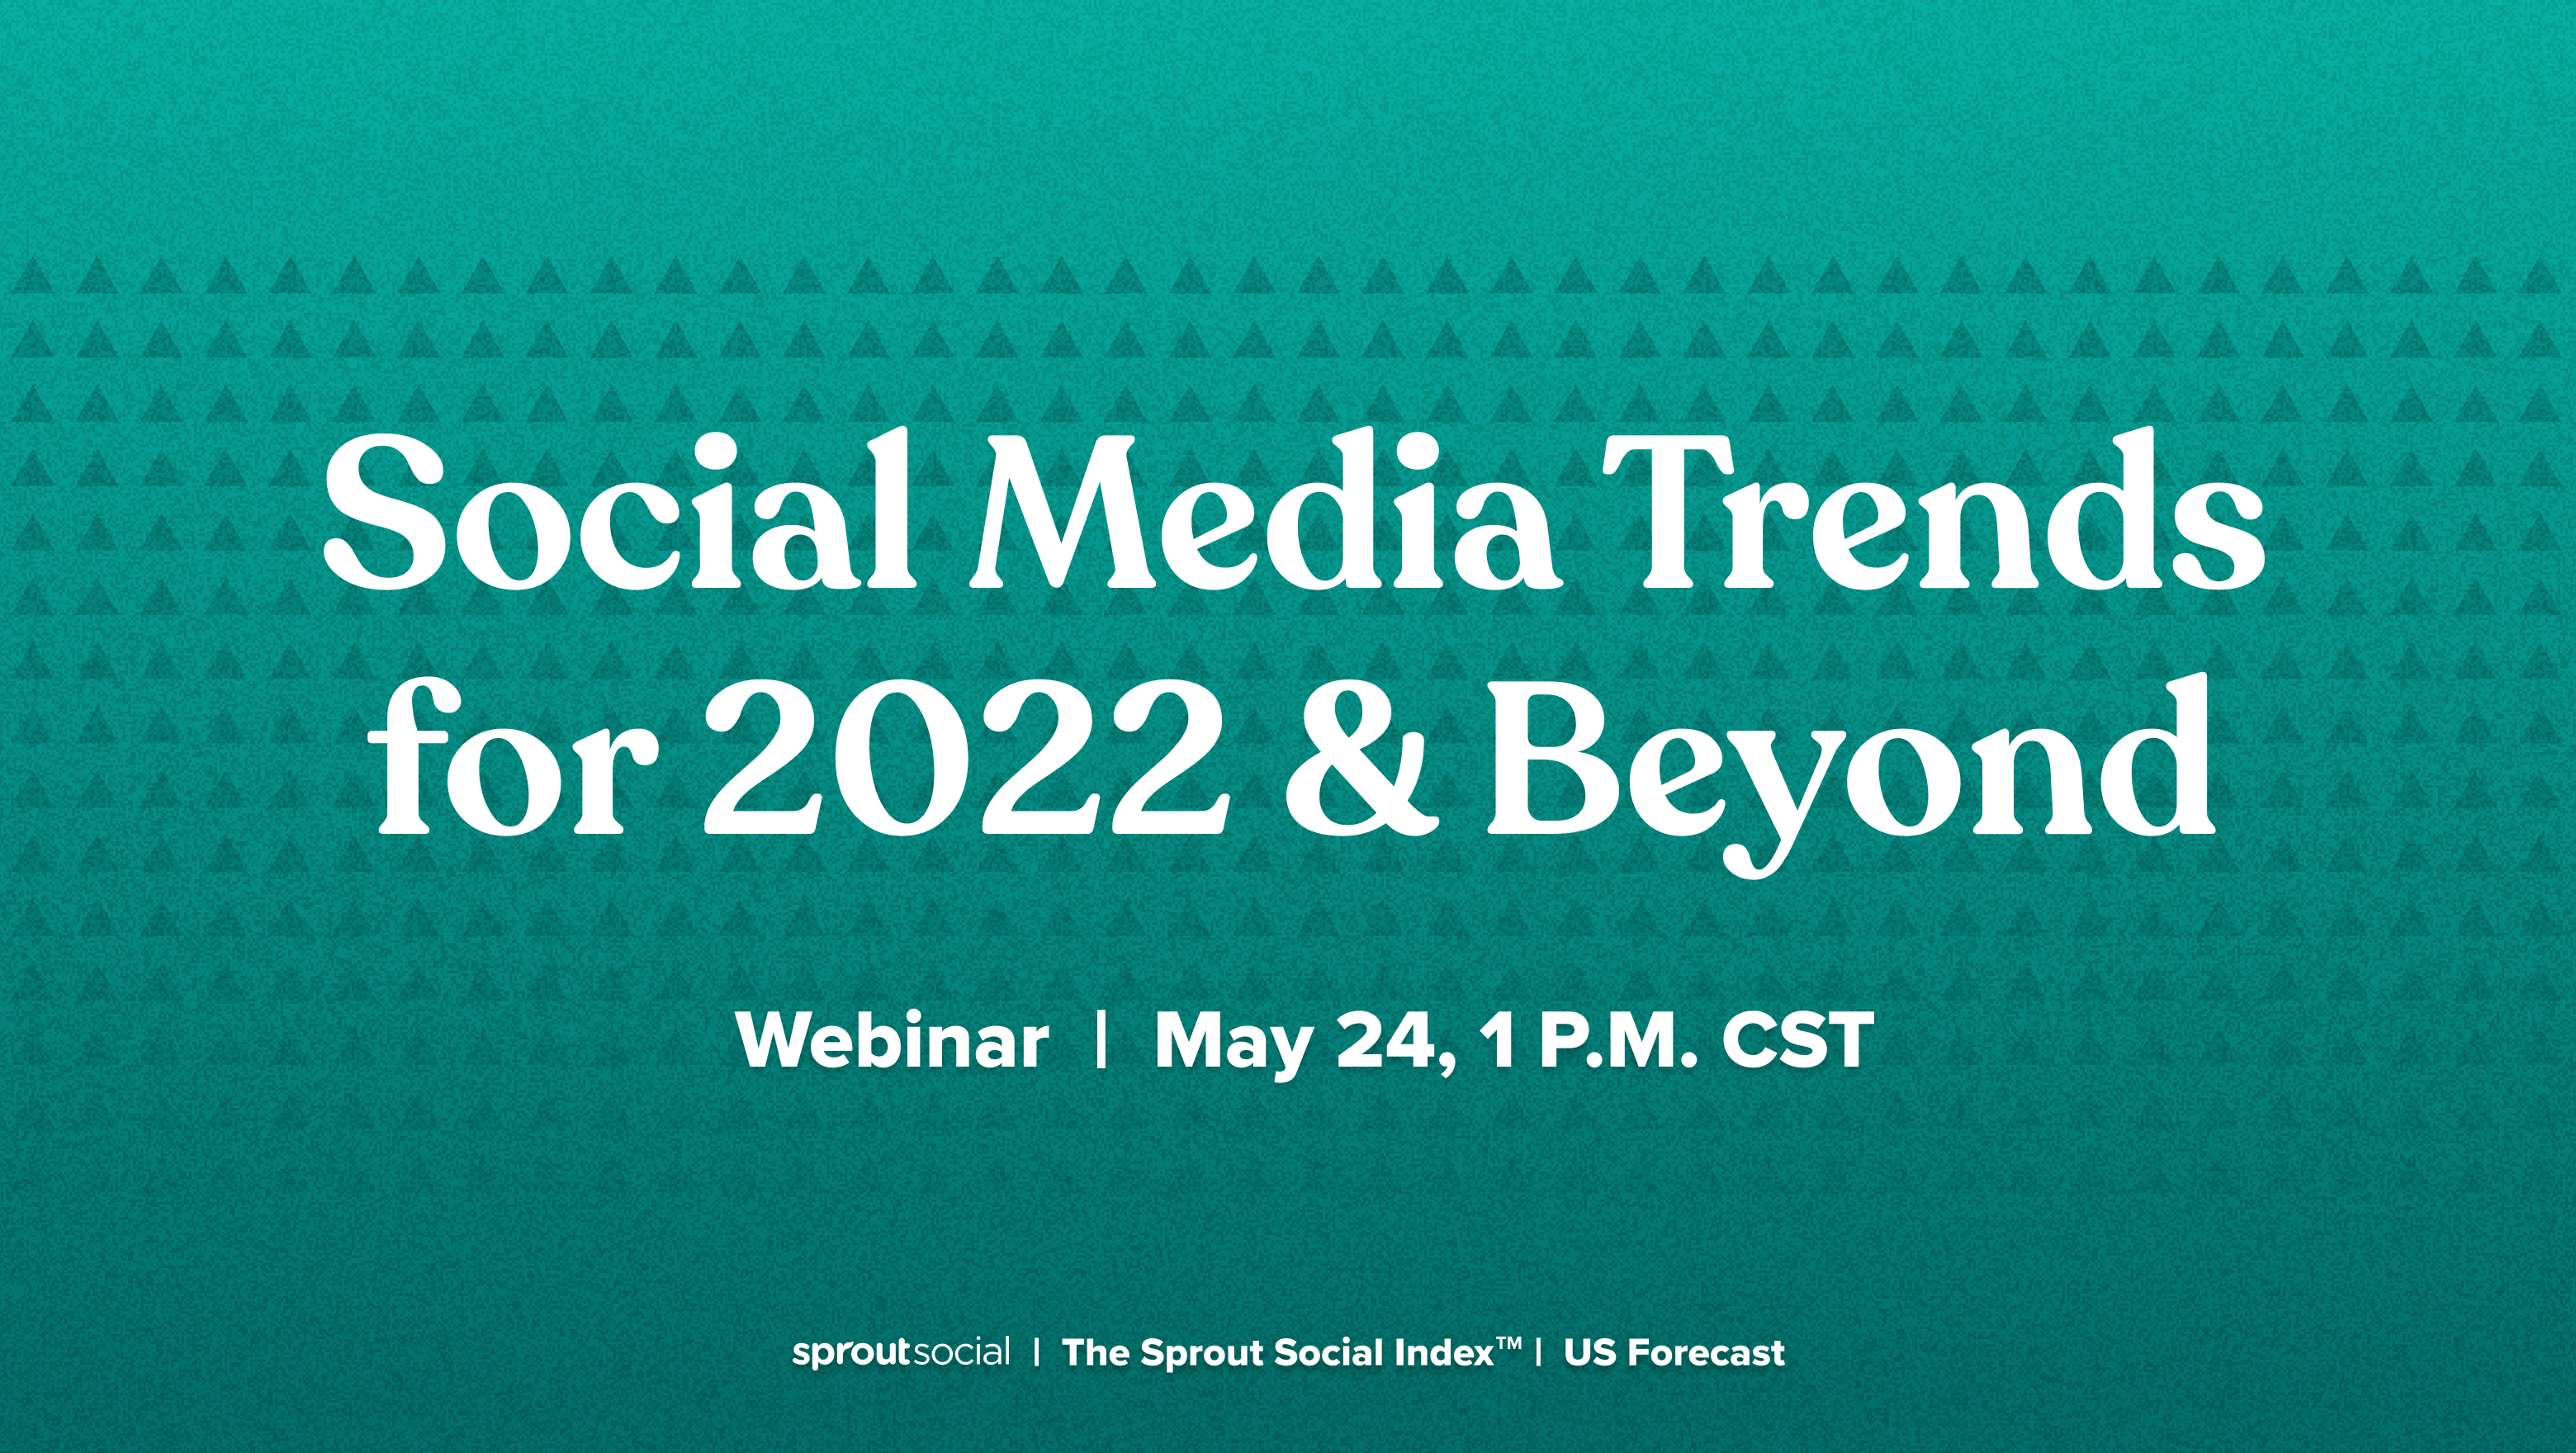 Social Media Trends for 2022 and Beyond Webinar